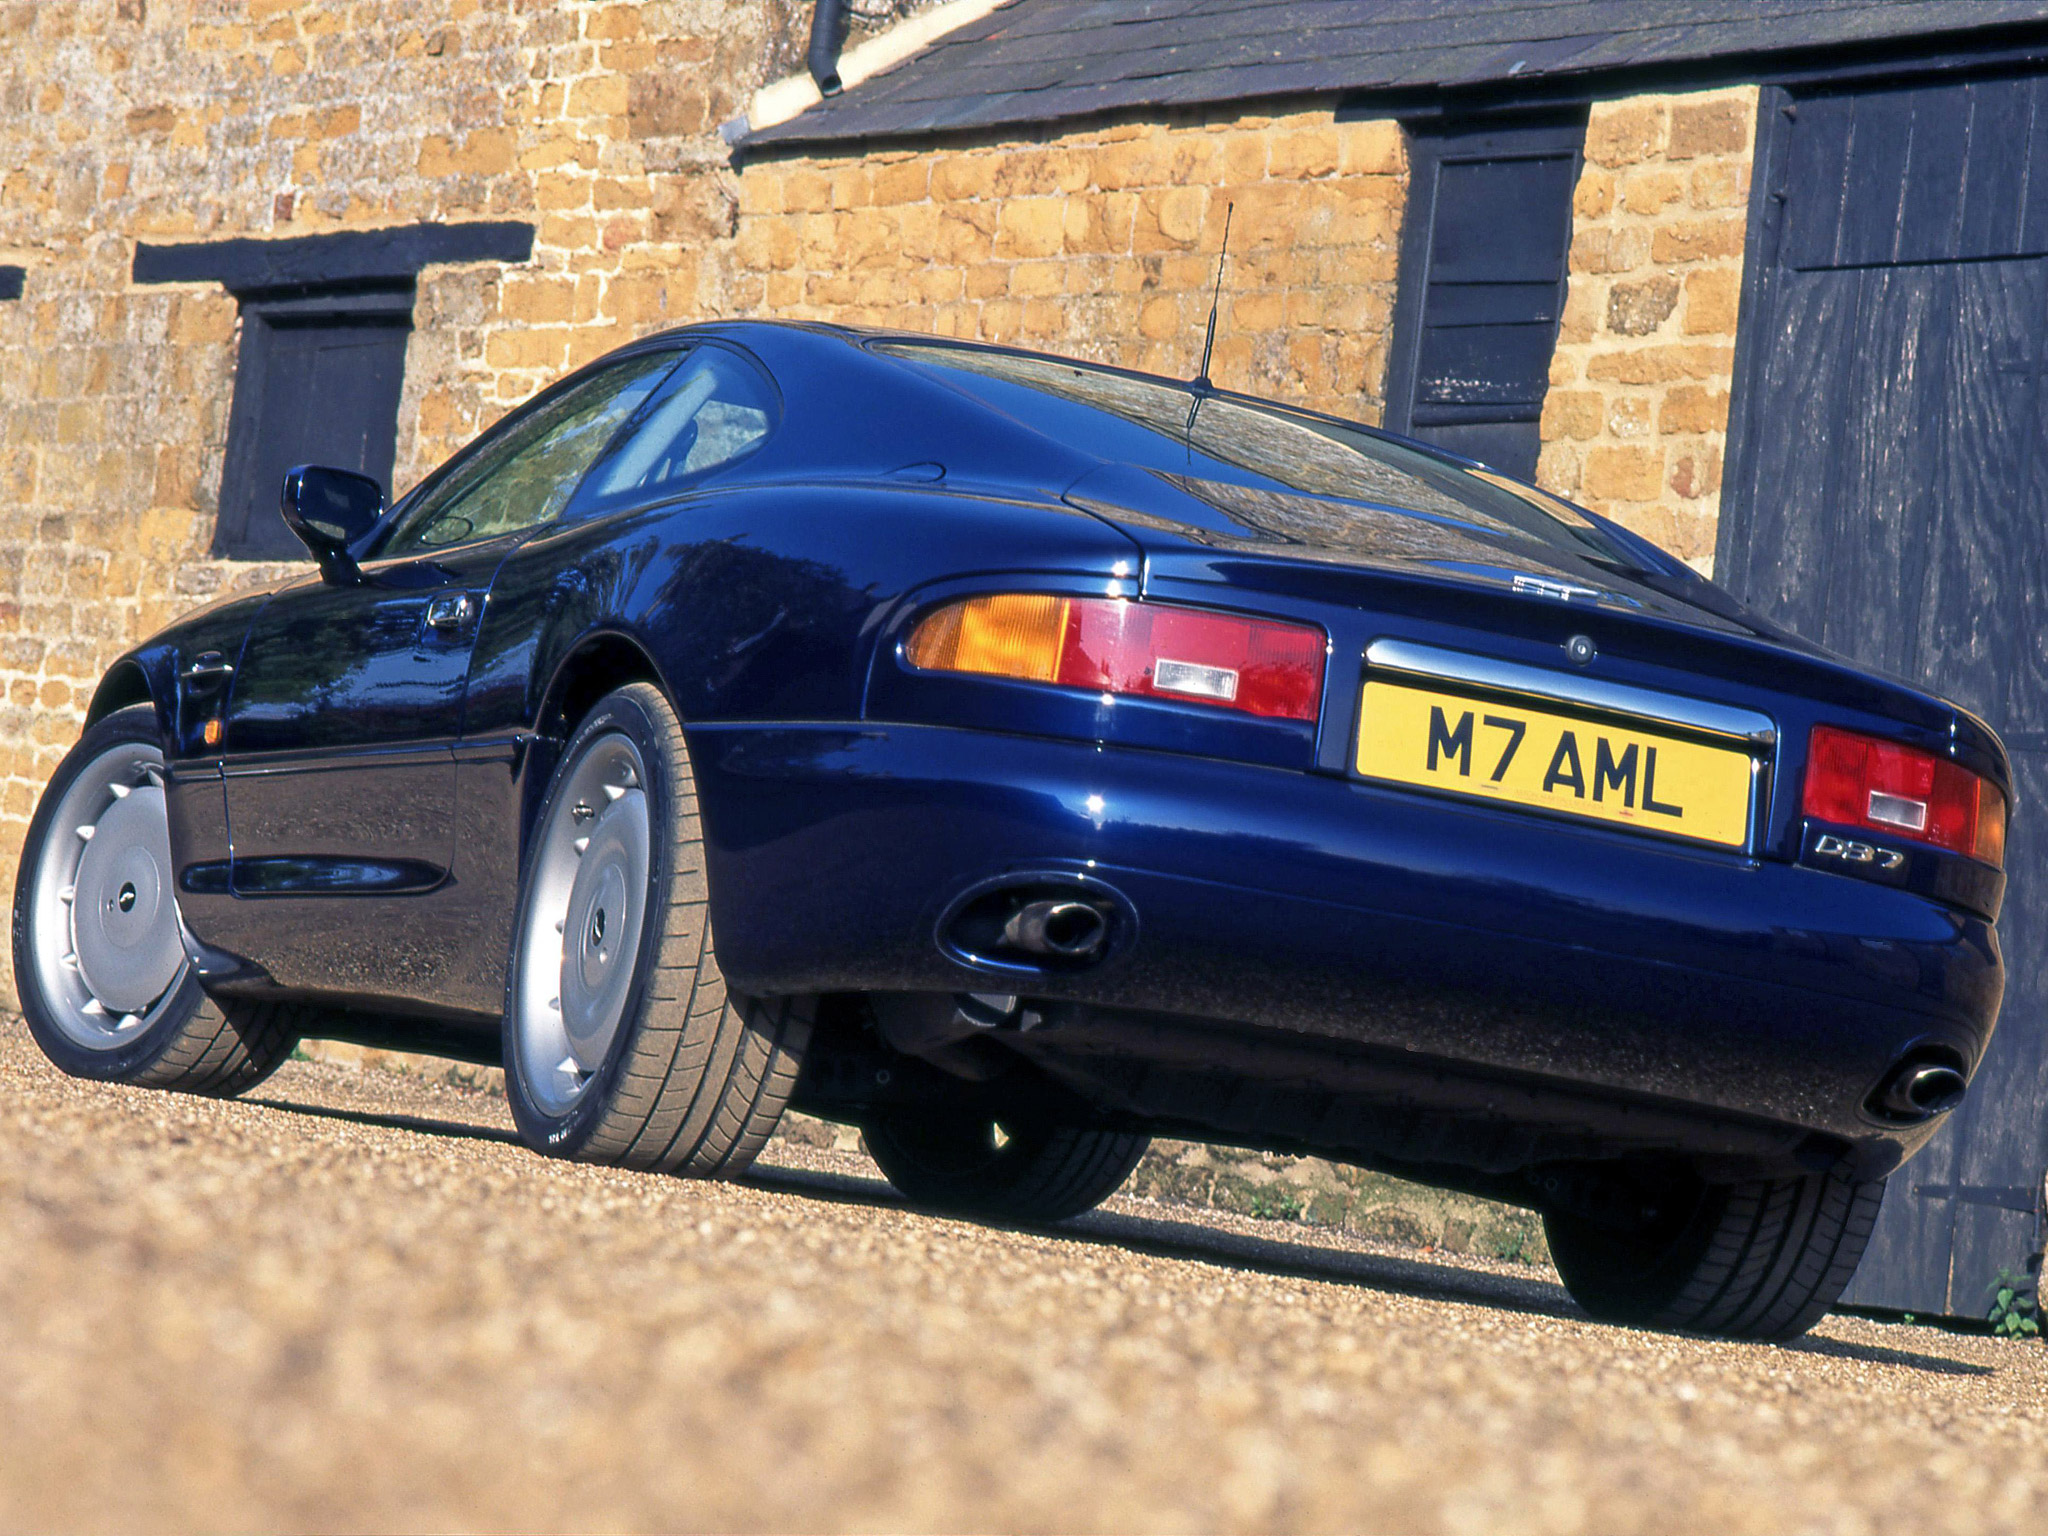  1994 Aston Martin DB7 Wallpaper.